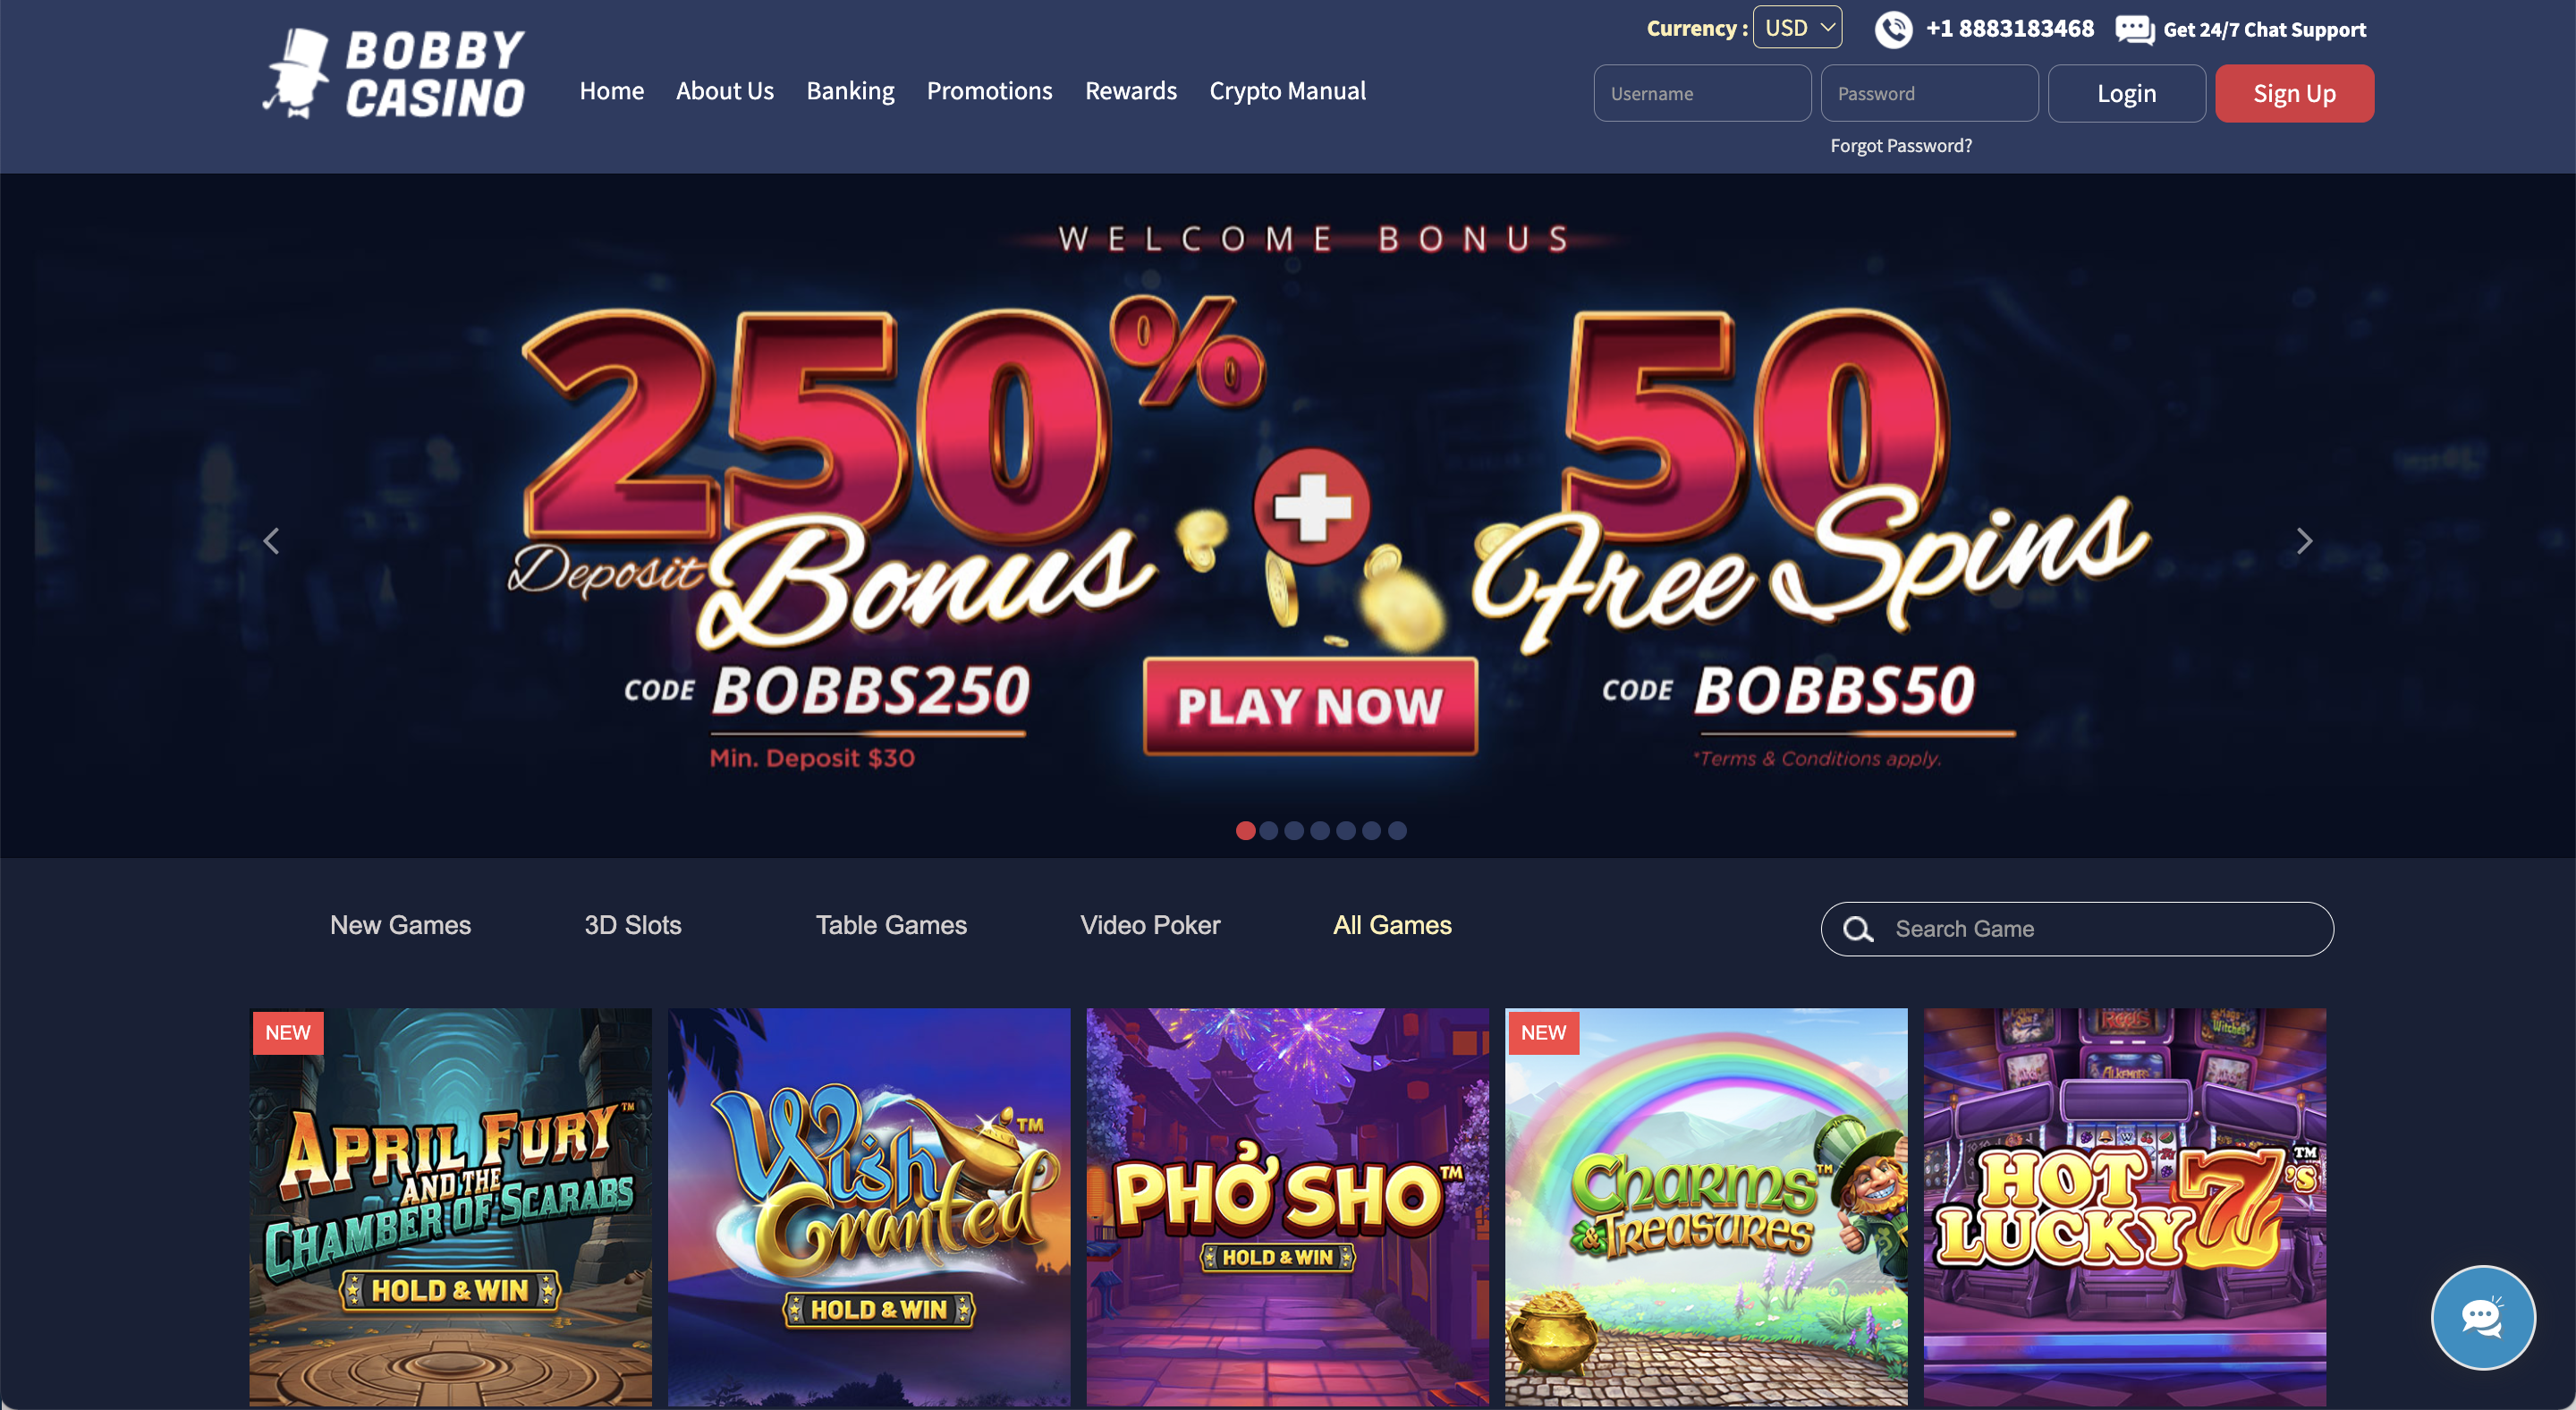 Bobby Casino Website